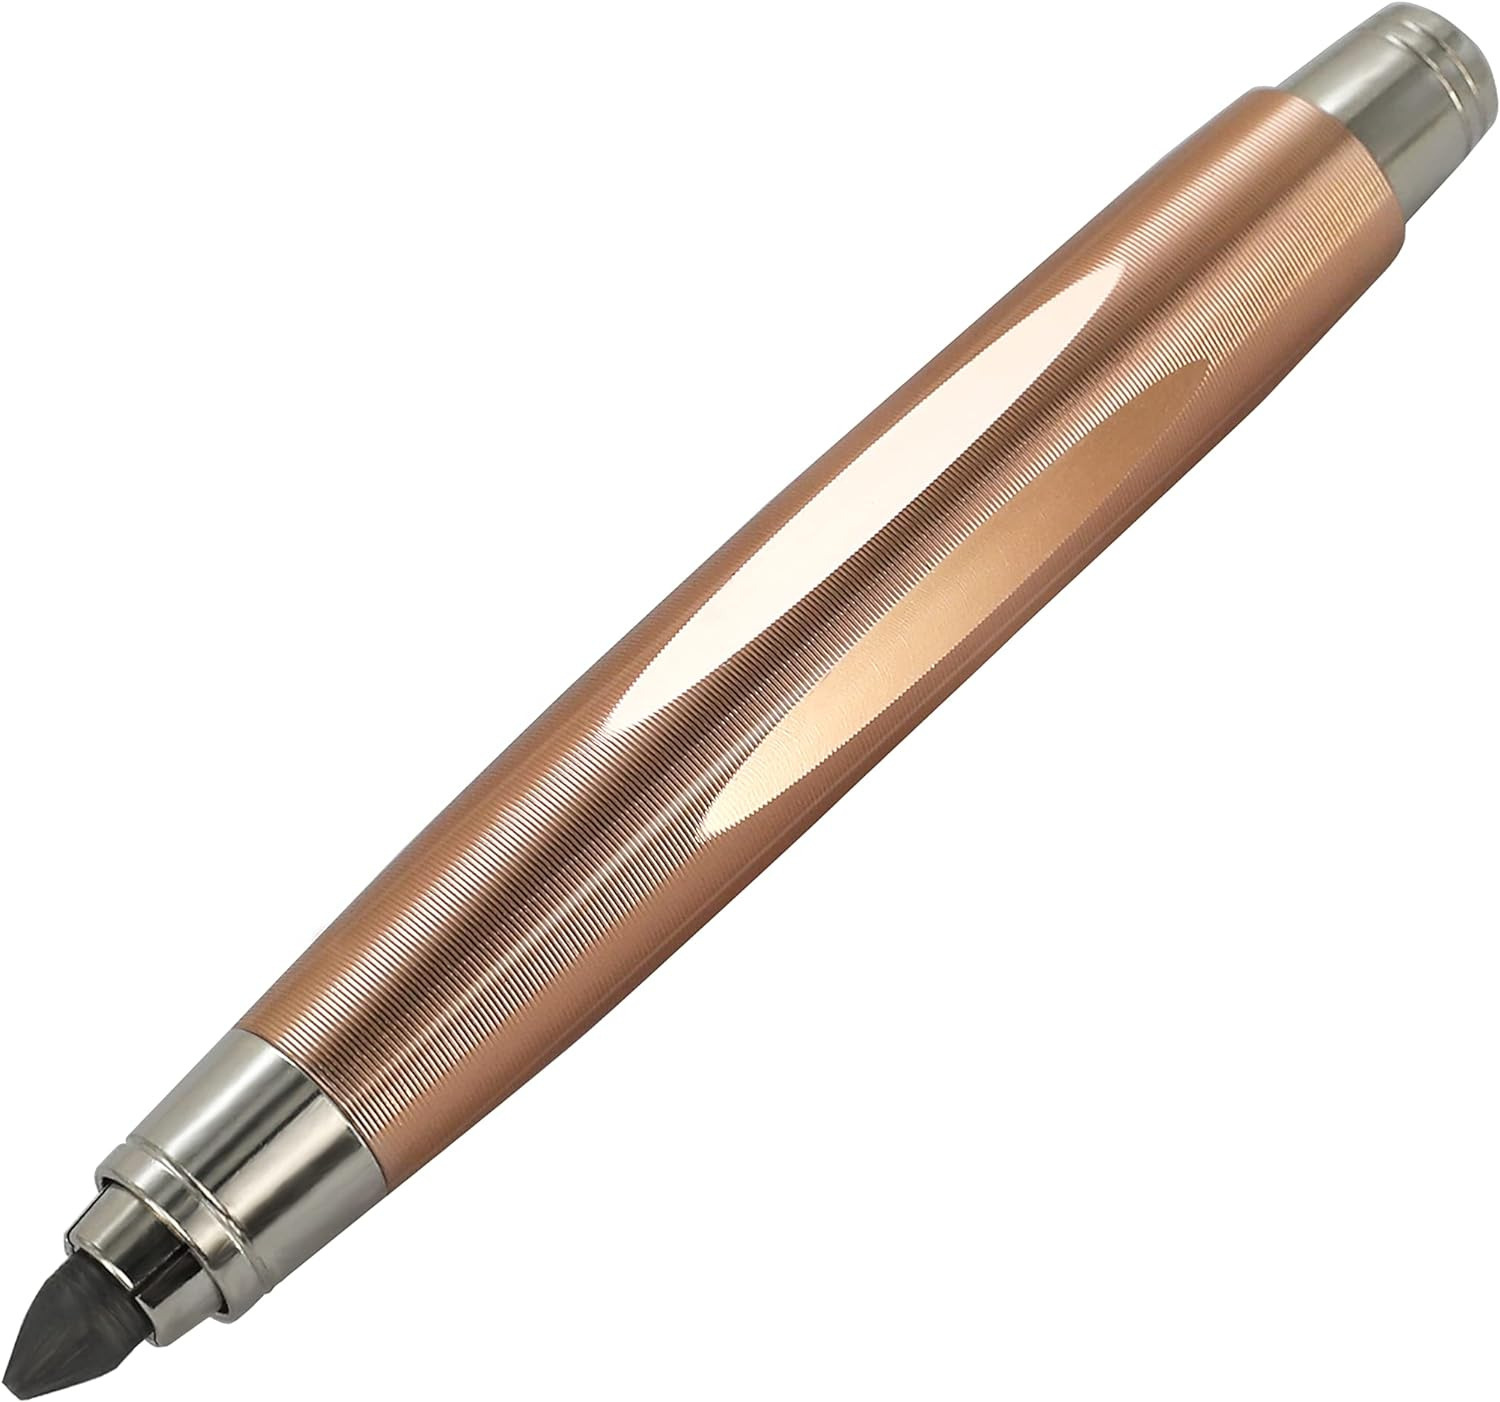 Sketch up 5.6Mm Mechanical Pencil Mechanical Clutch with Built Sharpener (Gold)